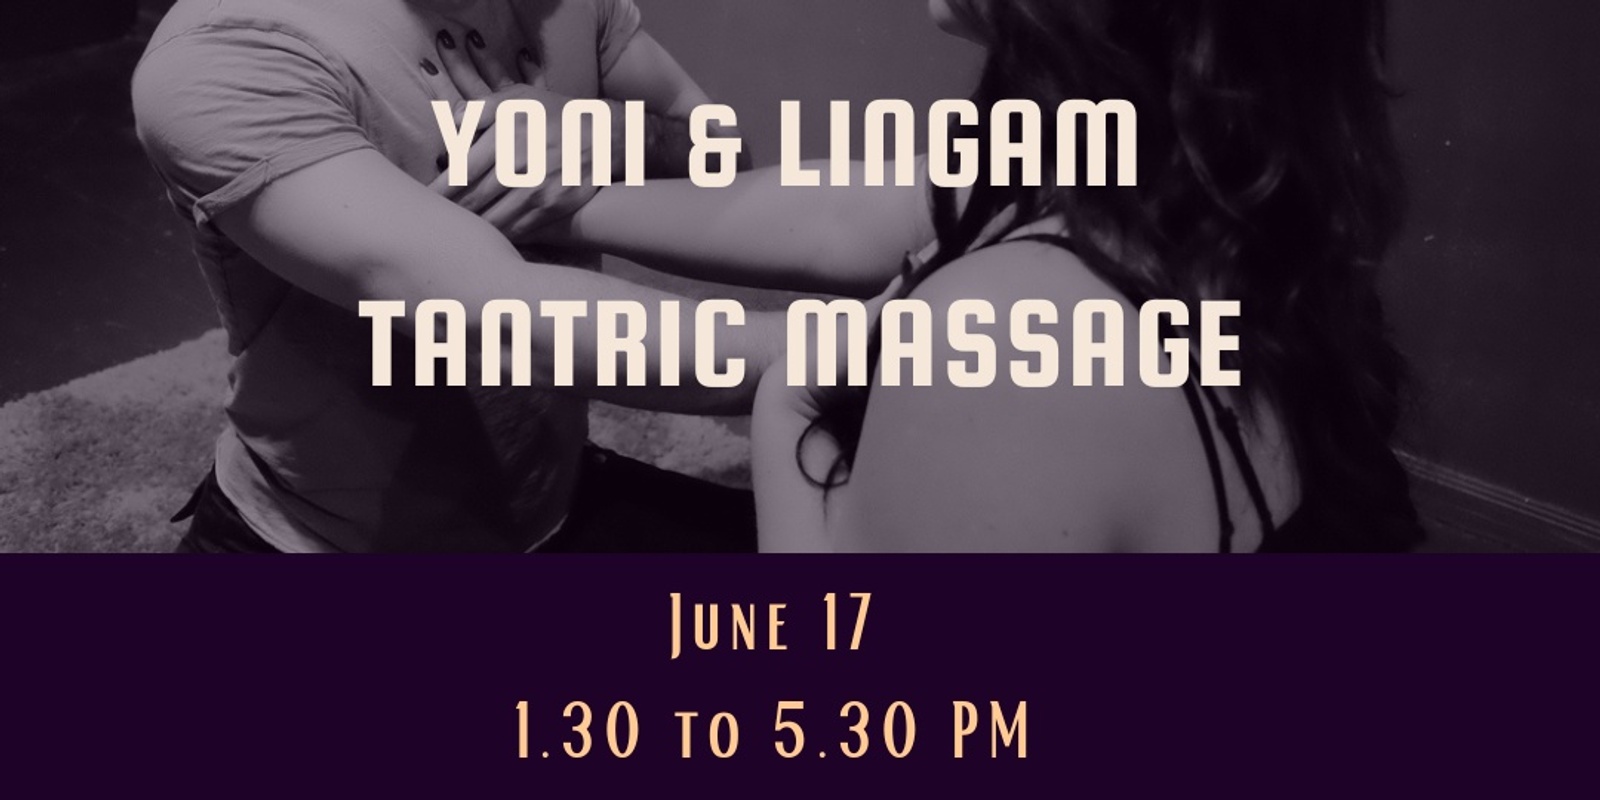 Yoni and Lingam Tantric Massage - Sydney